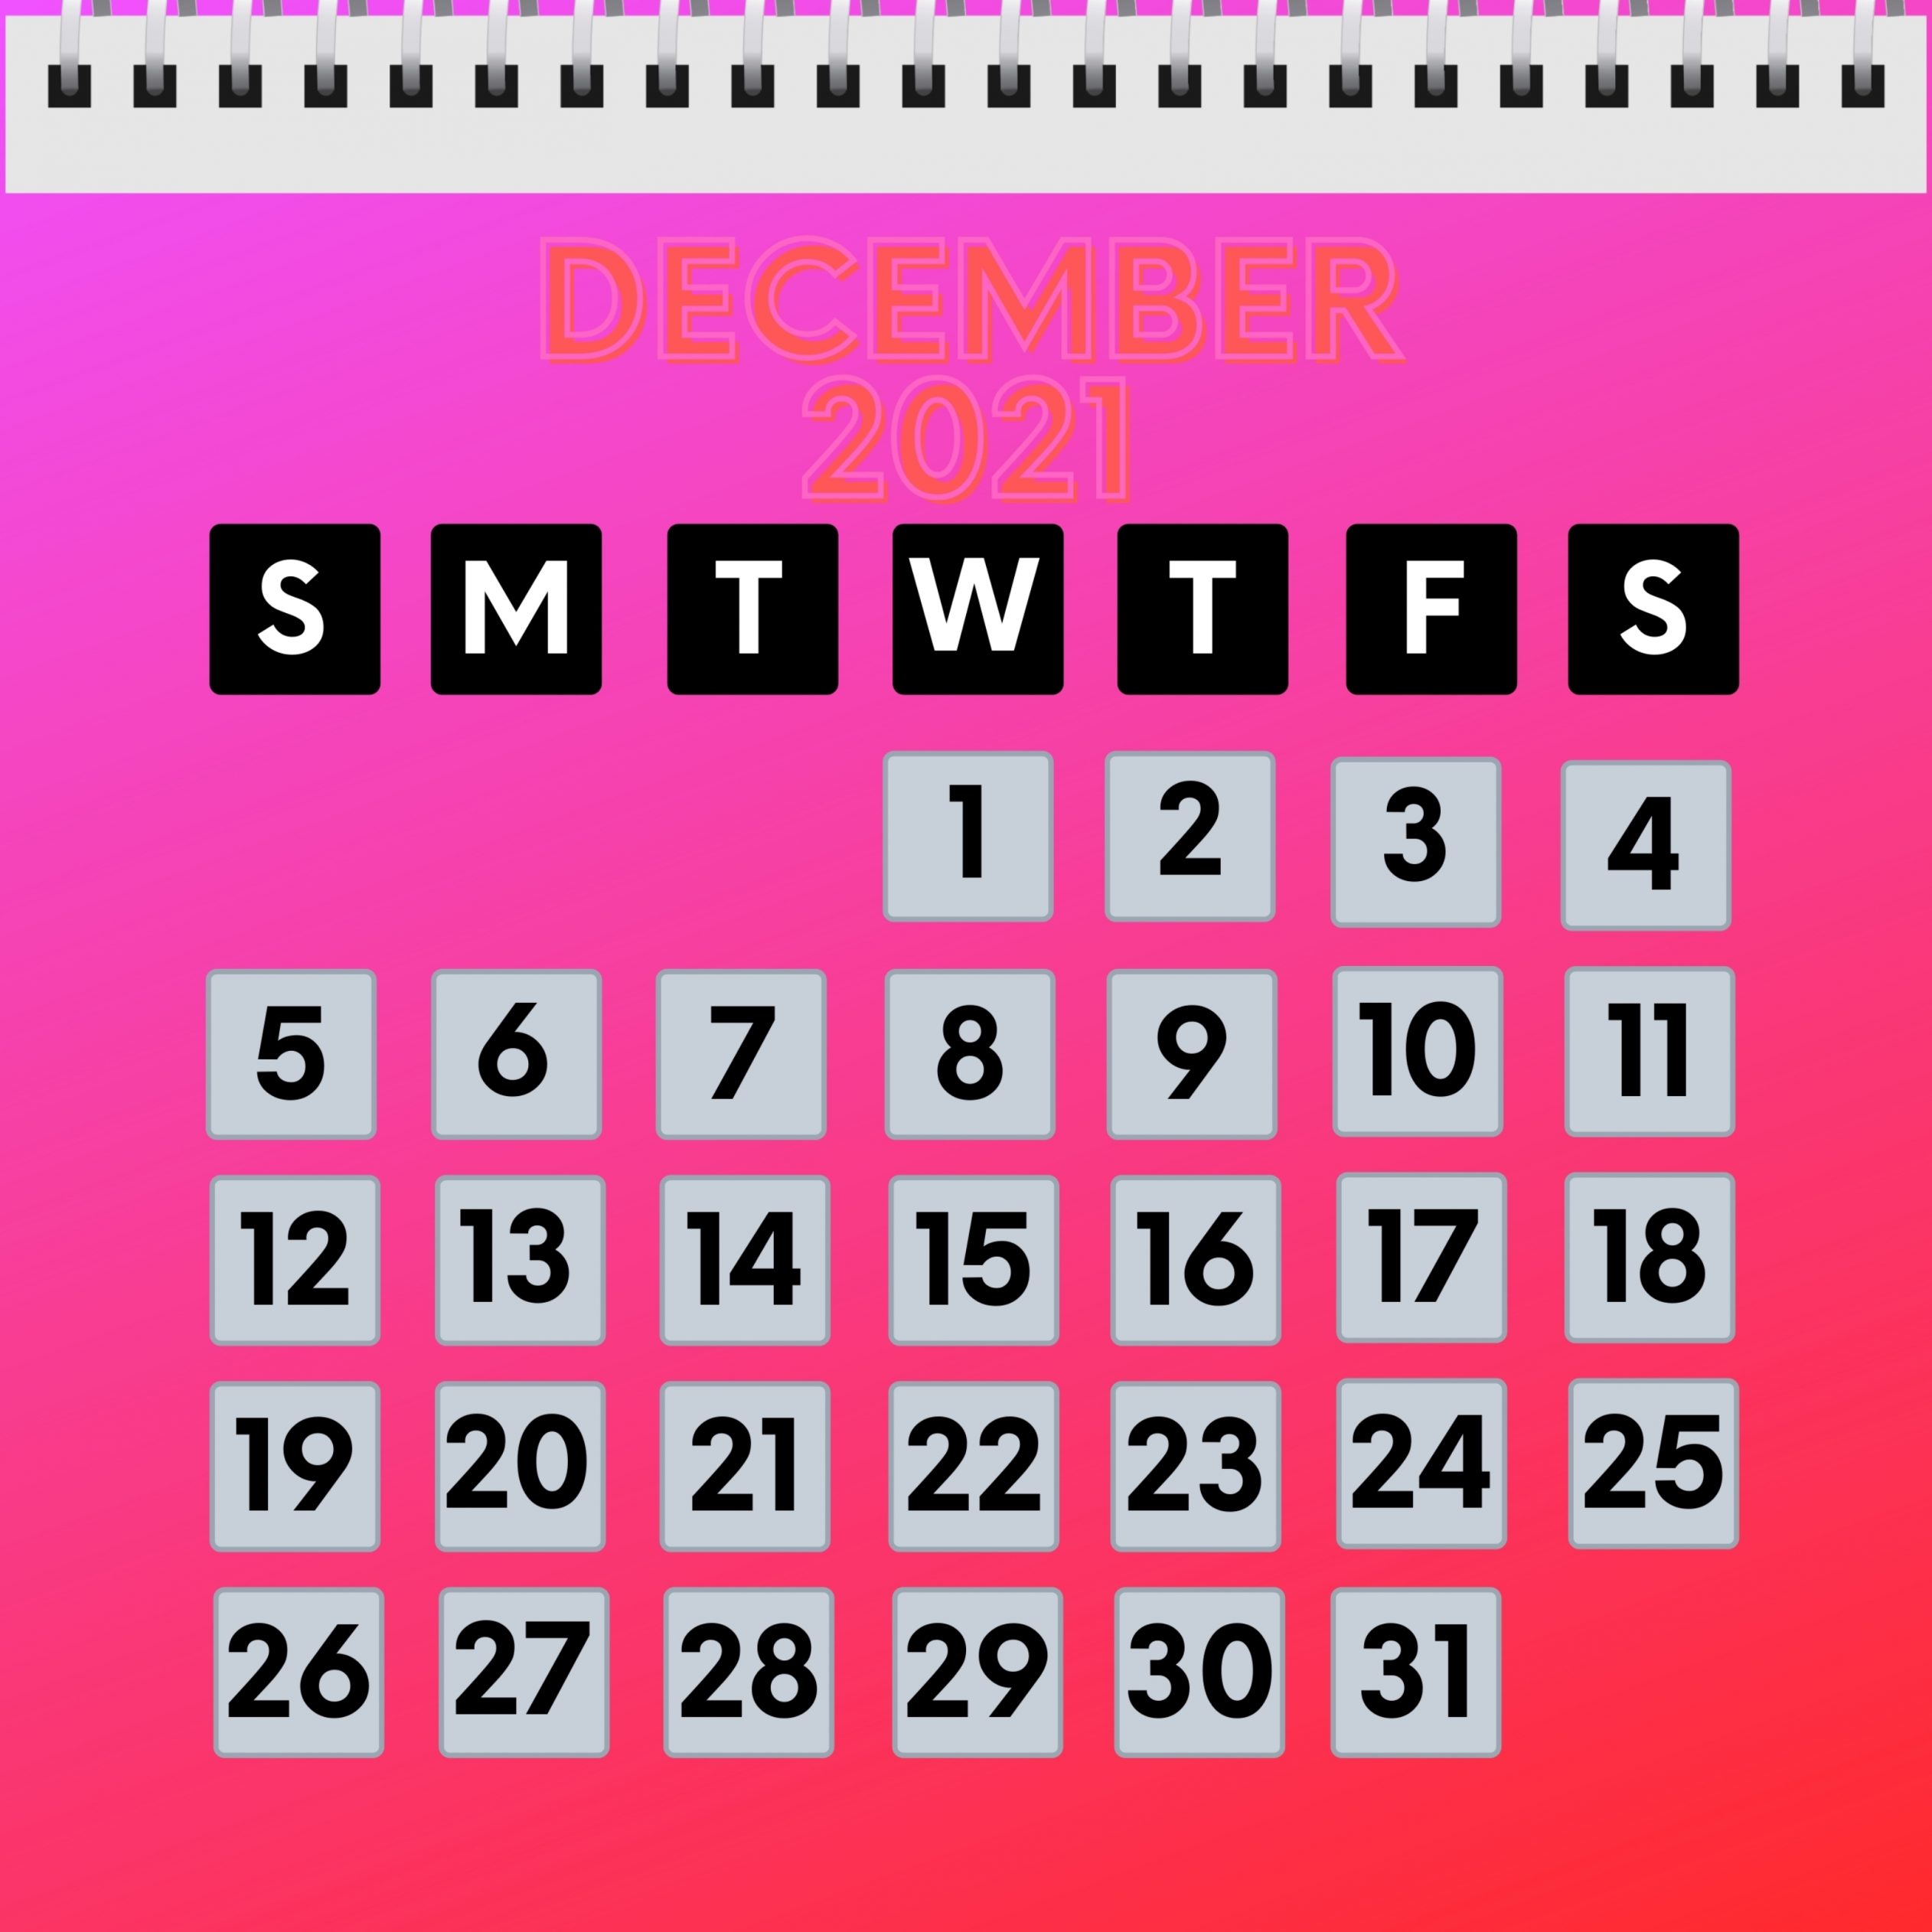 2524x2524 Parallax wallpaper 4k December 2021 Calendar iPad Wallpaper 2524x2524 pixels resolution